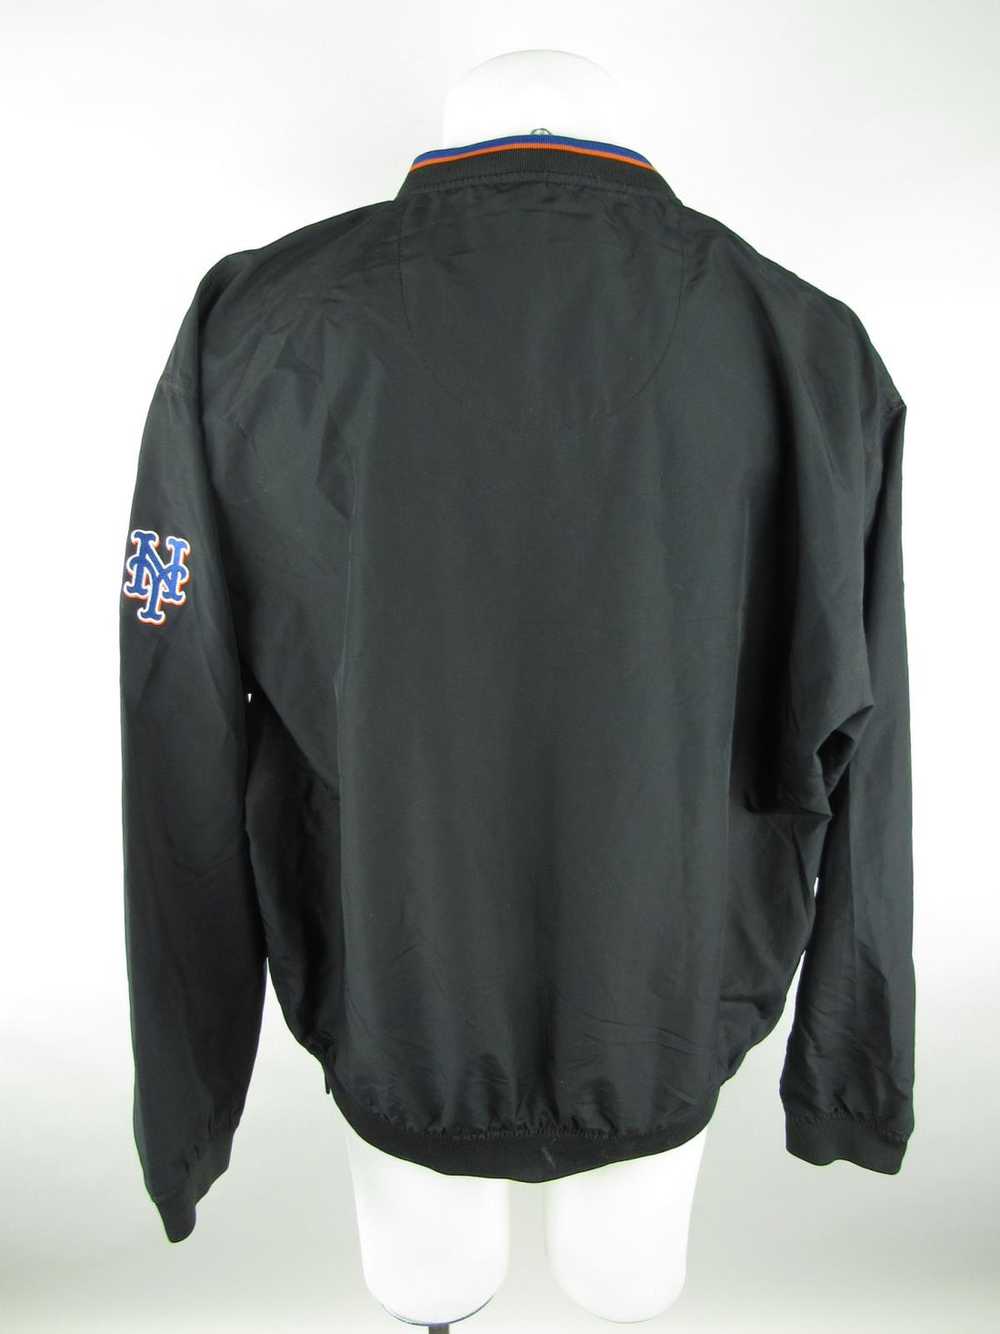 MLB Genuine Merchandise Nike Windbreaker Jacket - image 2